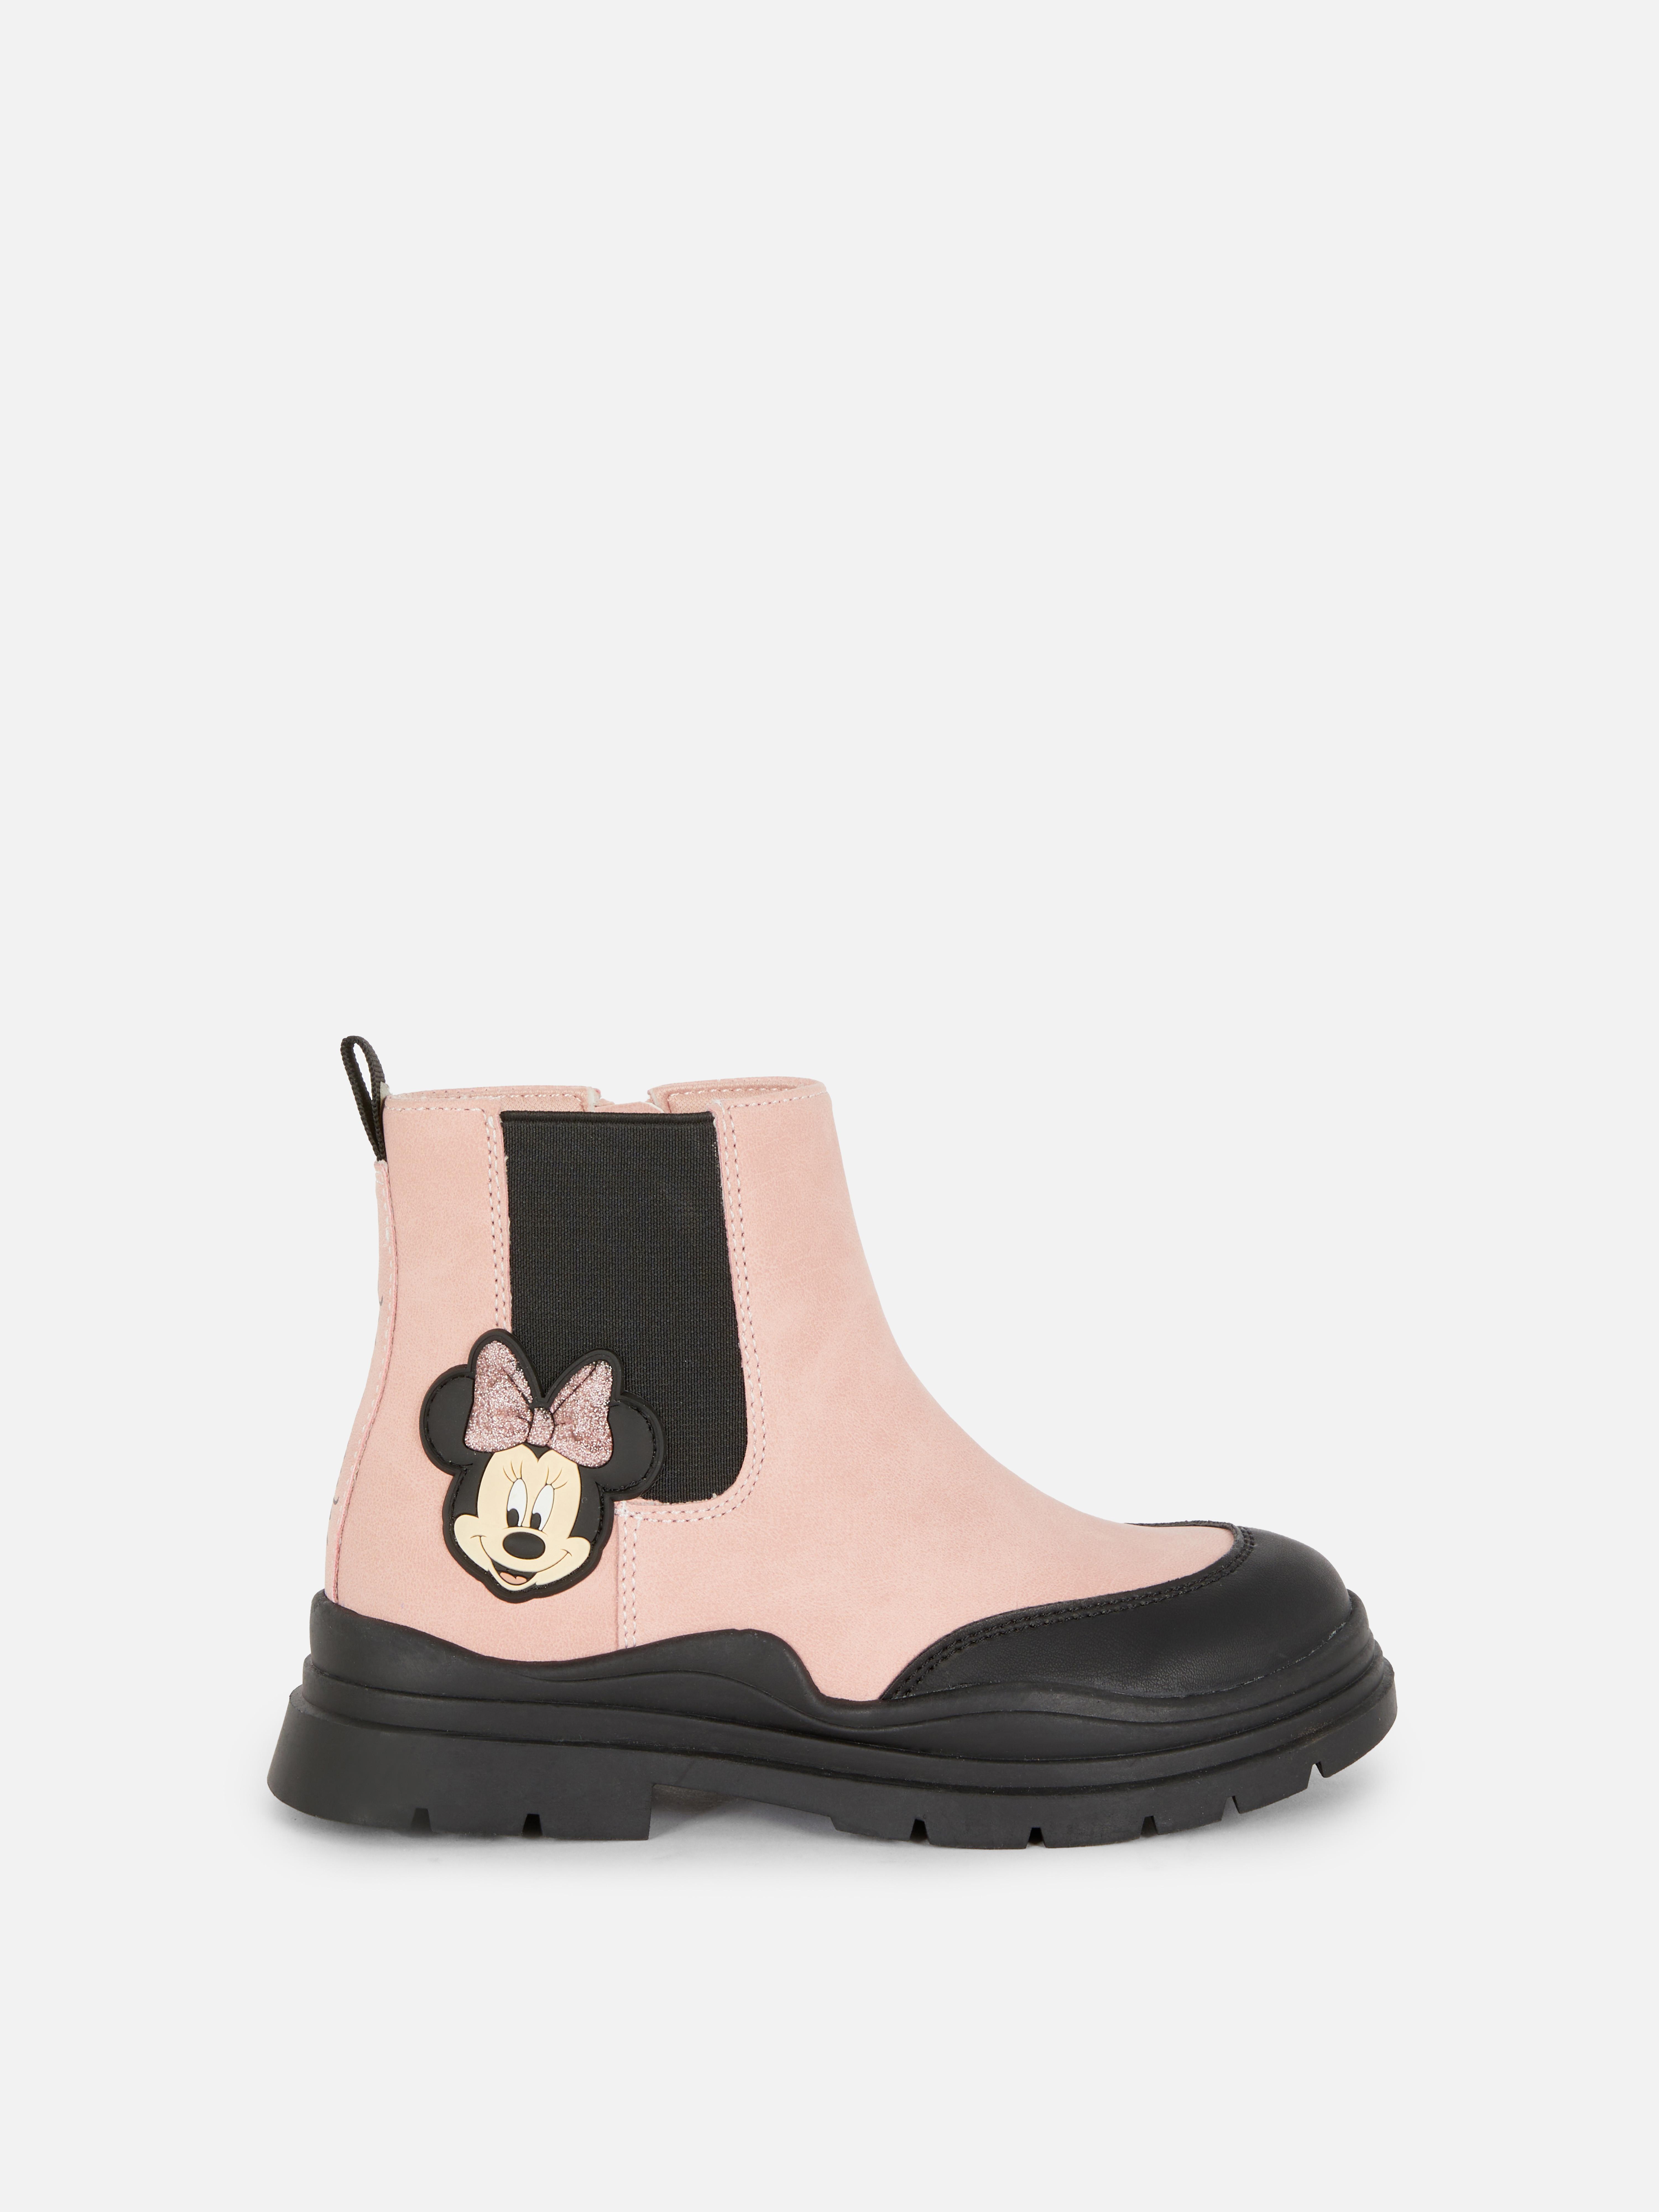 Disney's Minnie Mouse Chelsea Boots